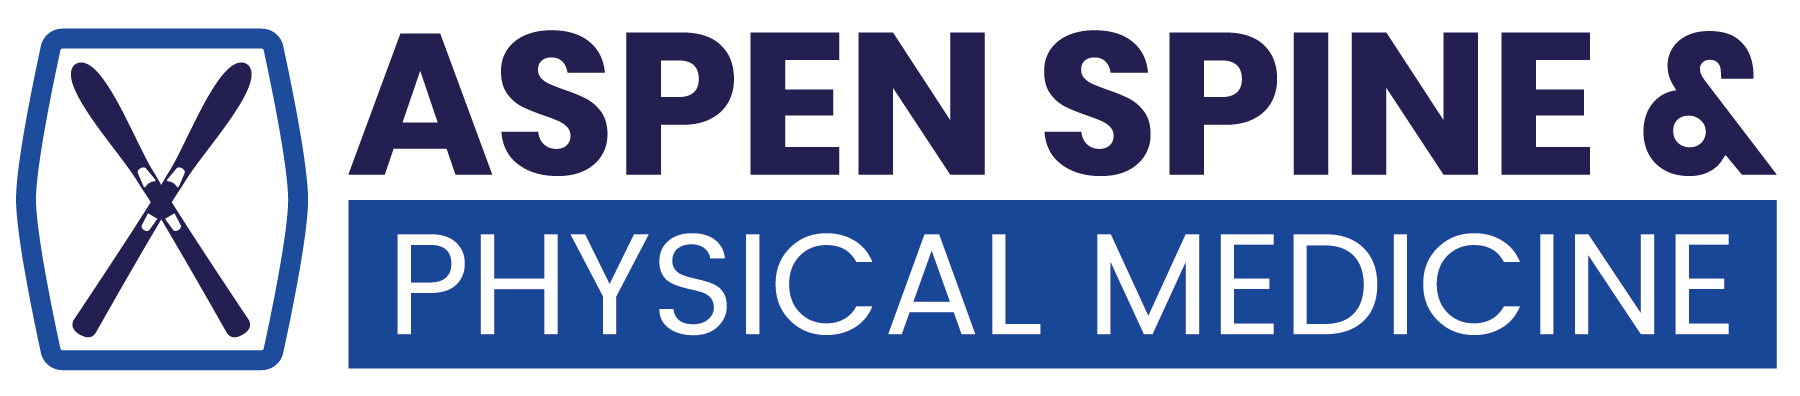 Aspen spine & physical medicine logo.